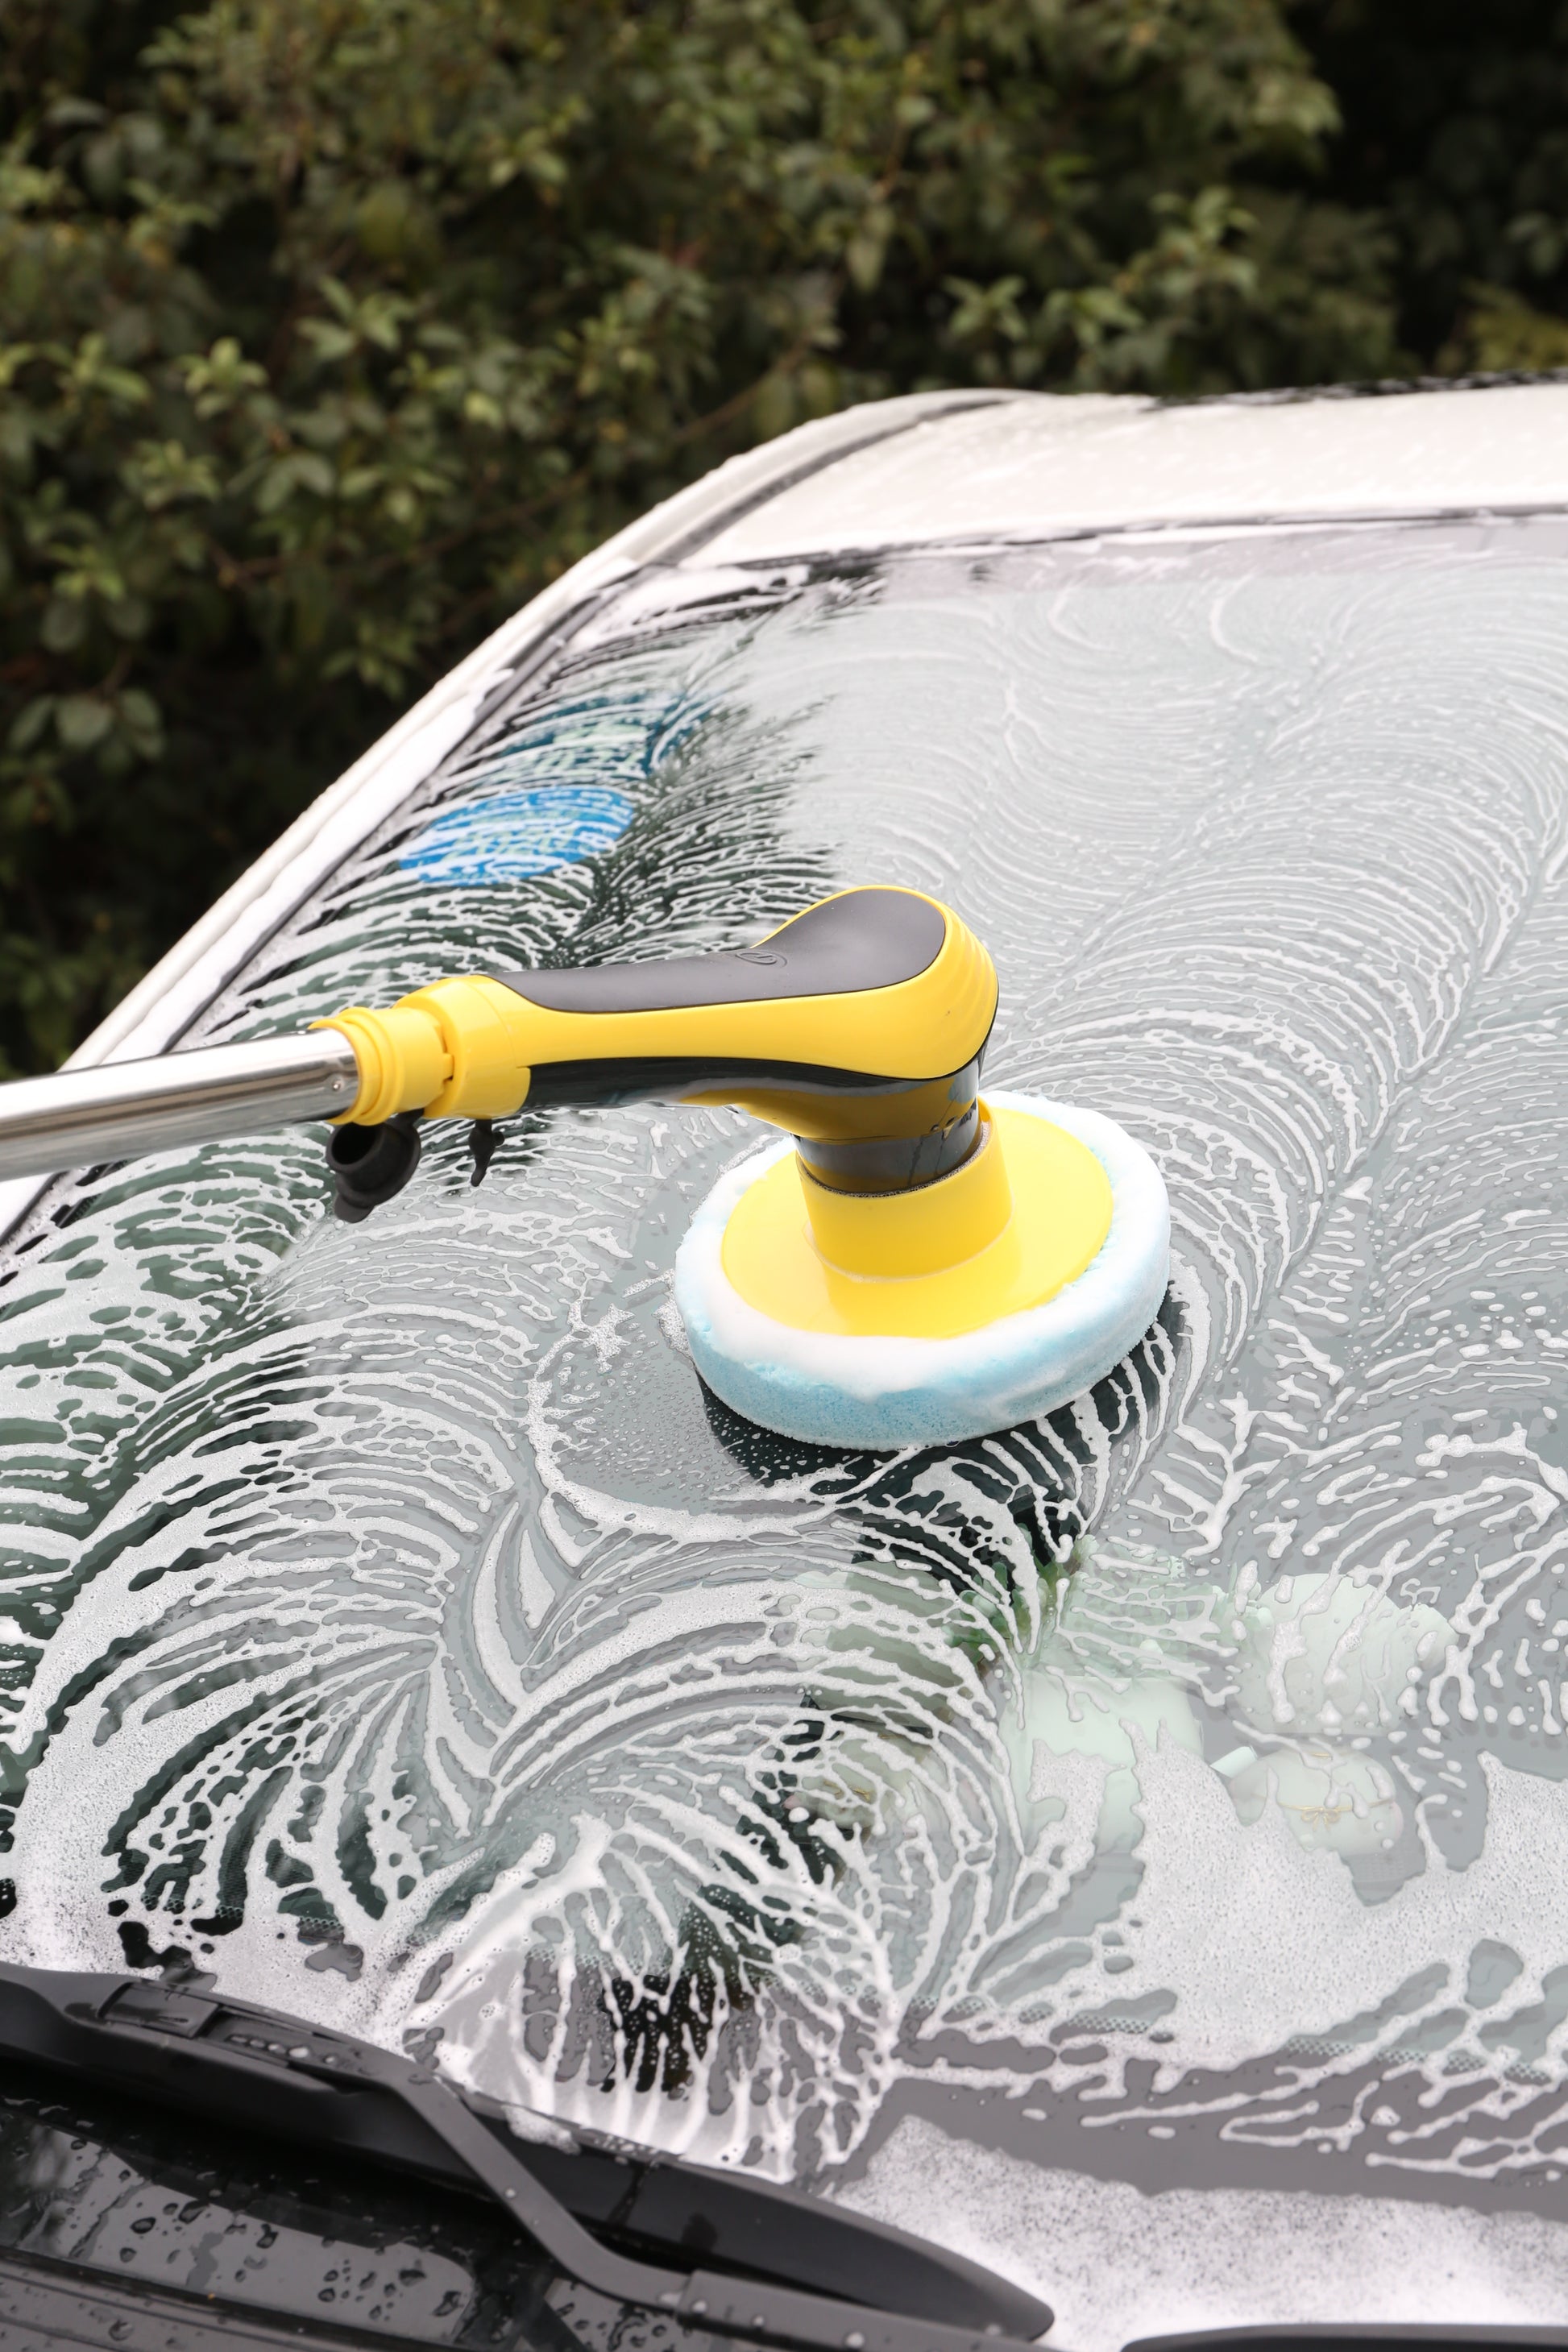 Car Wash Mop  Telescopic Rotating Soft Scrub Brush For Car Polish